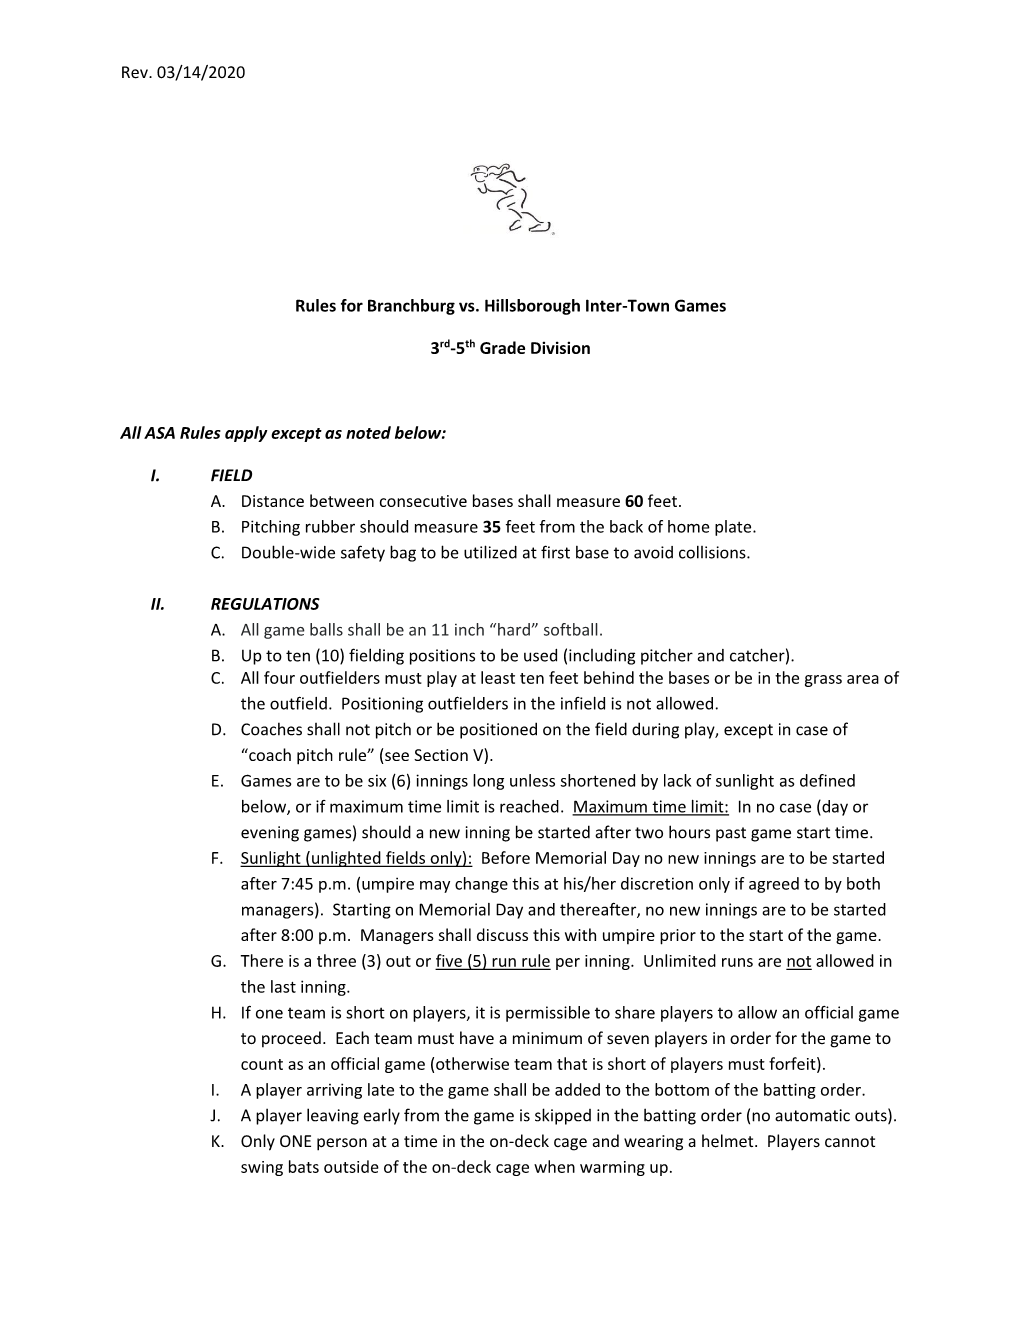 Rev. 03/14/2020 Rules for Branchburg Vs. Hillsborough Inter-Town